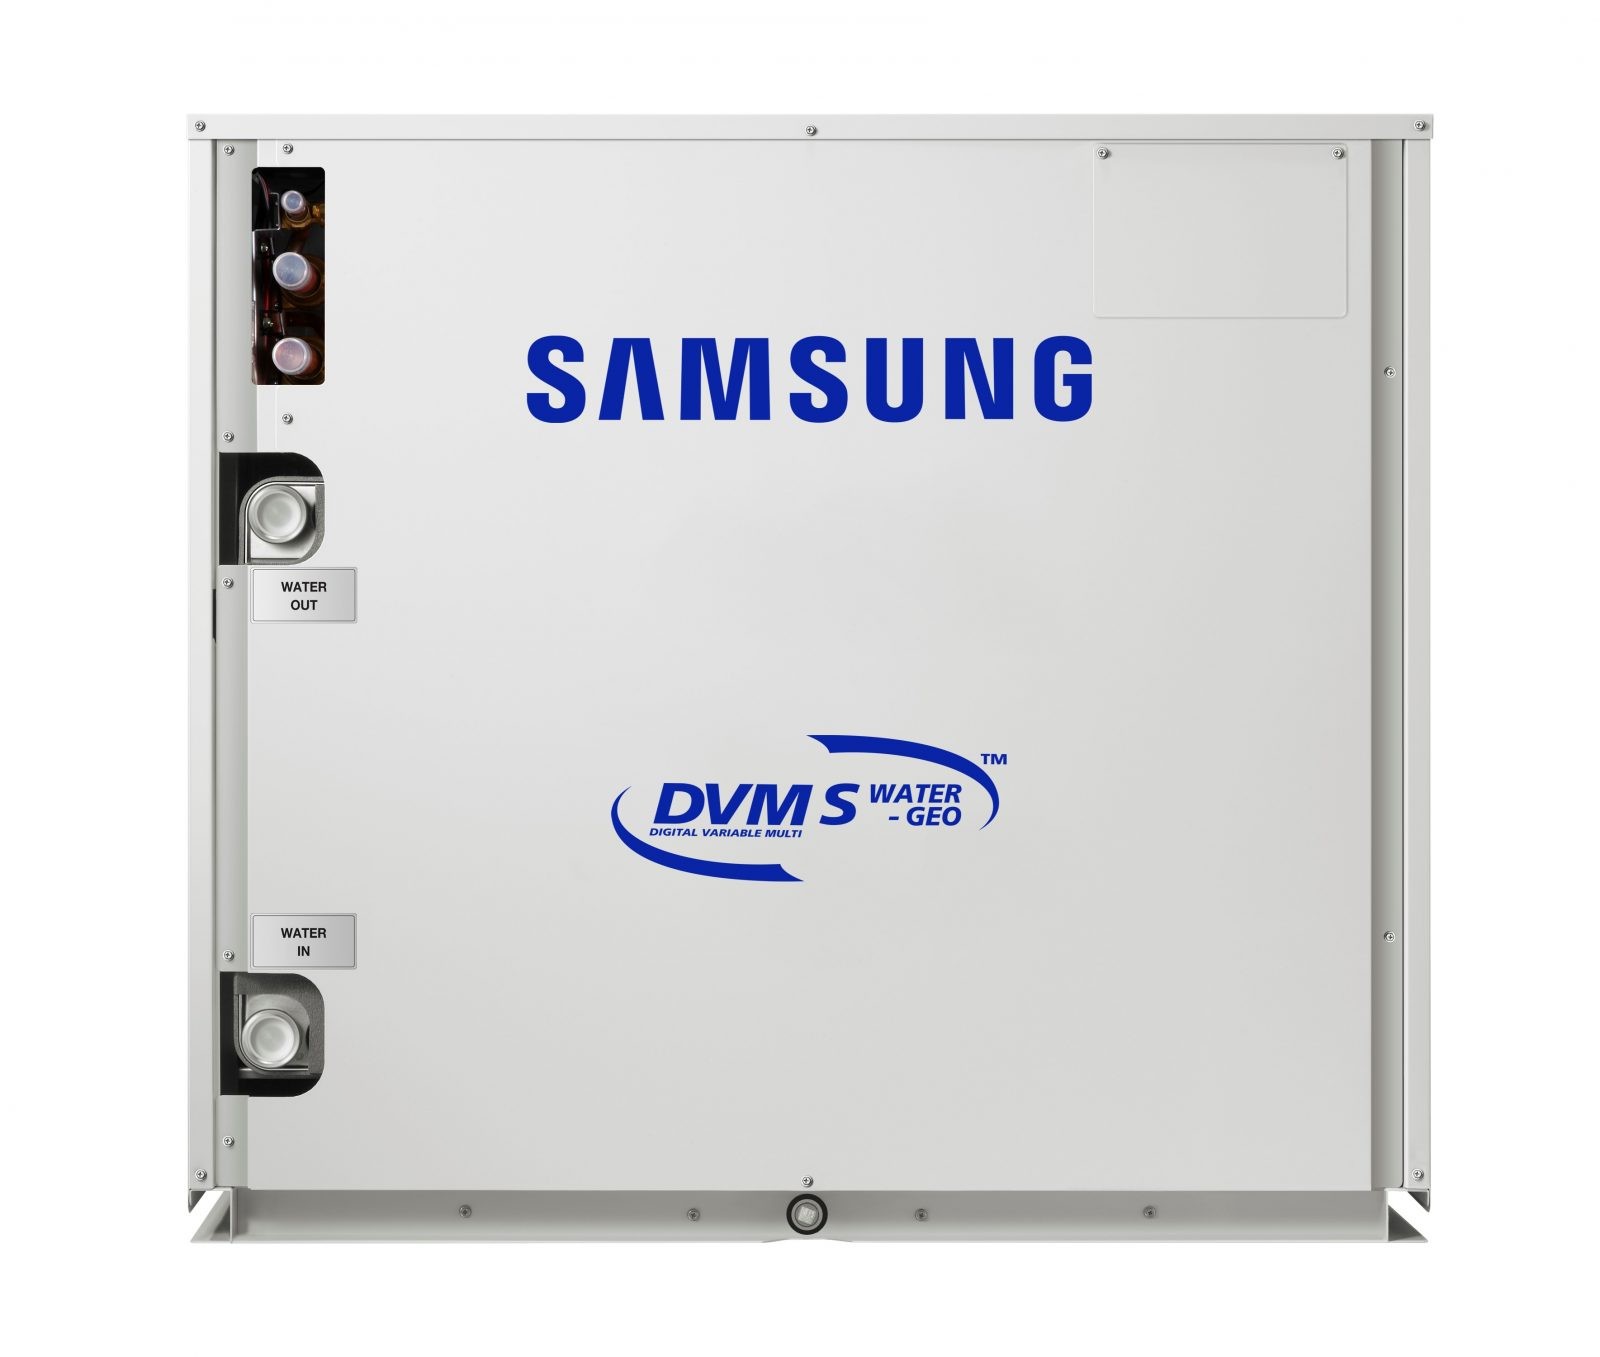 Външно тяло Samsung DVM S Water AM480MXWANR